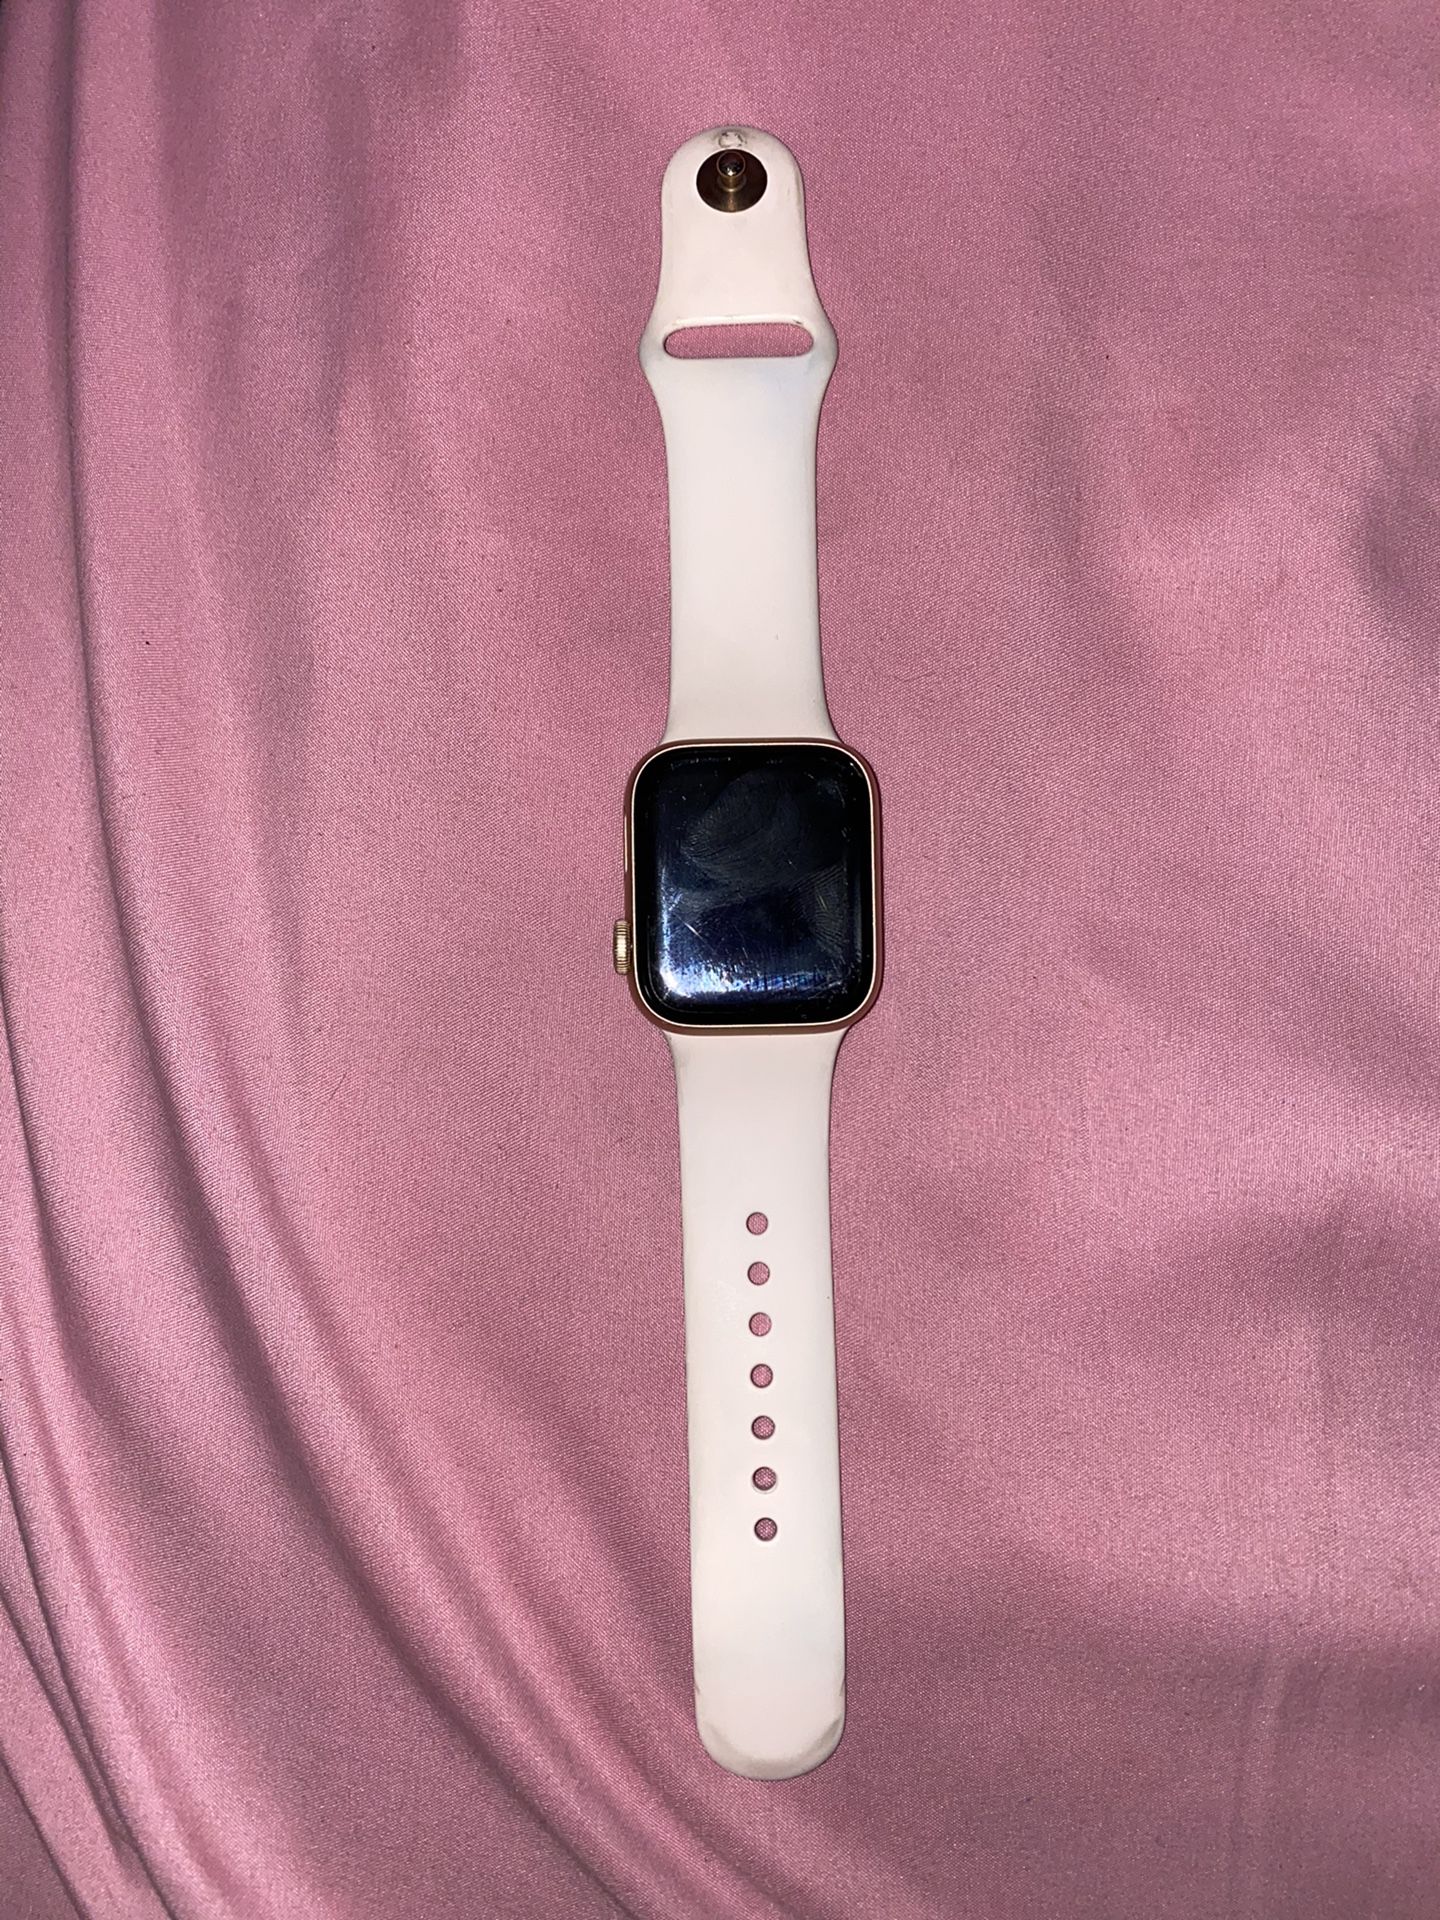 Apple Watch Series 4 w Cellular